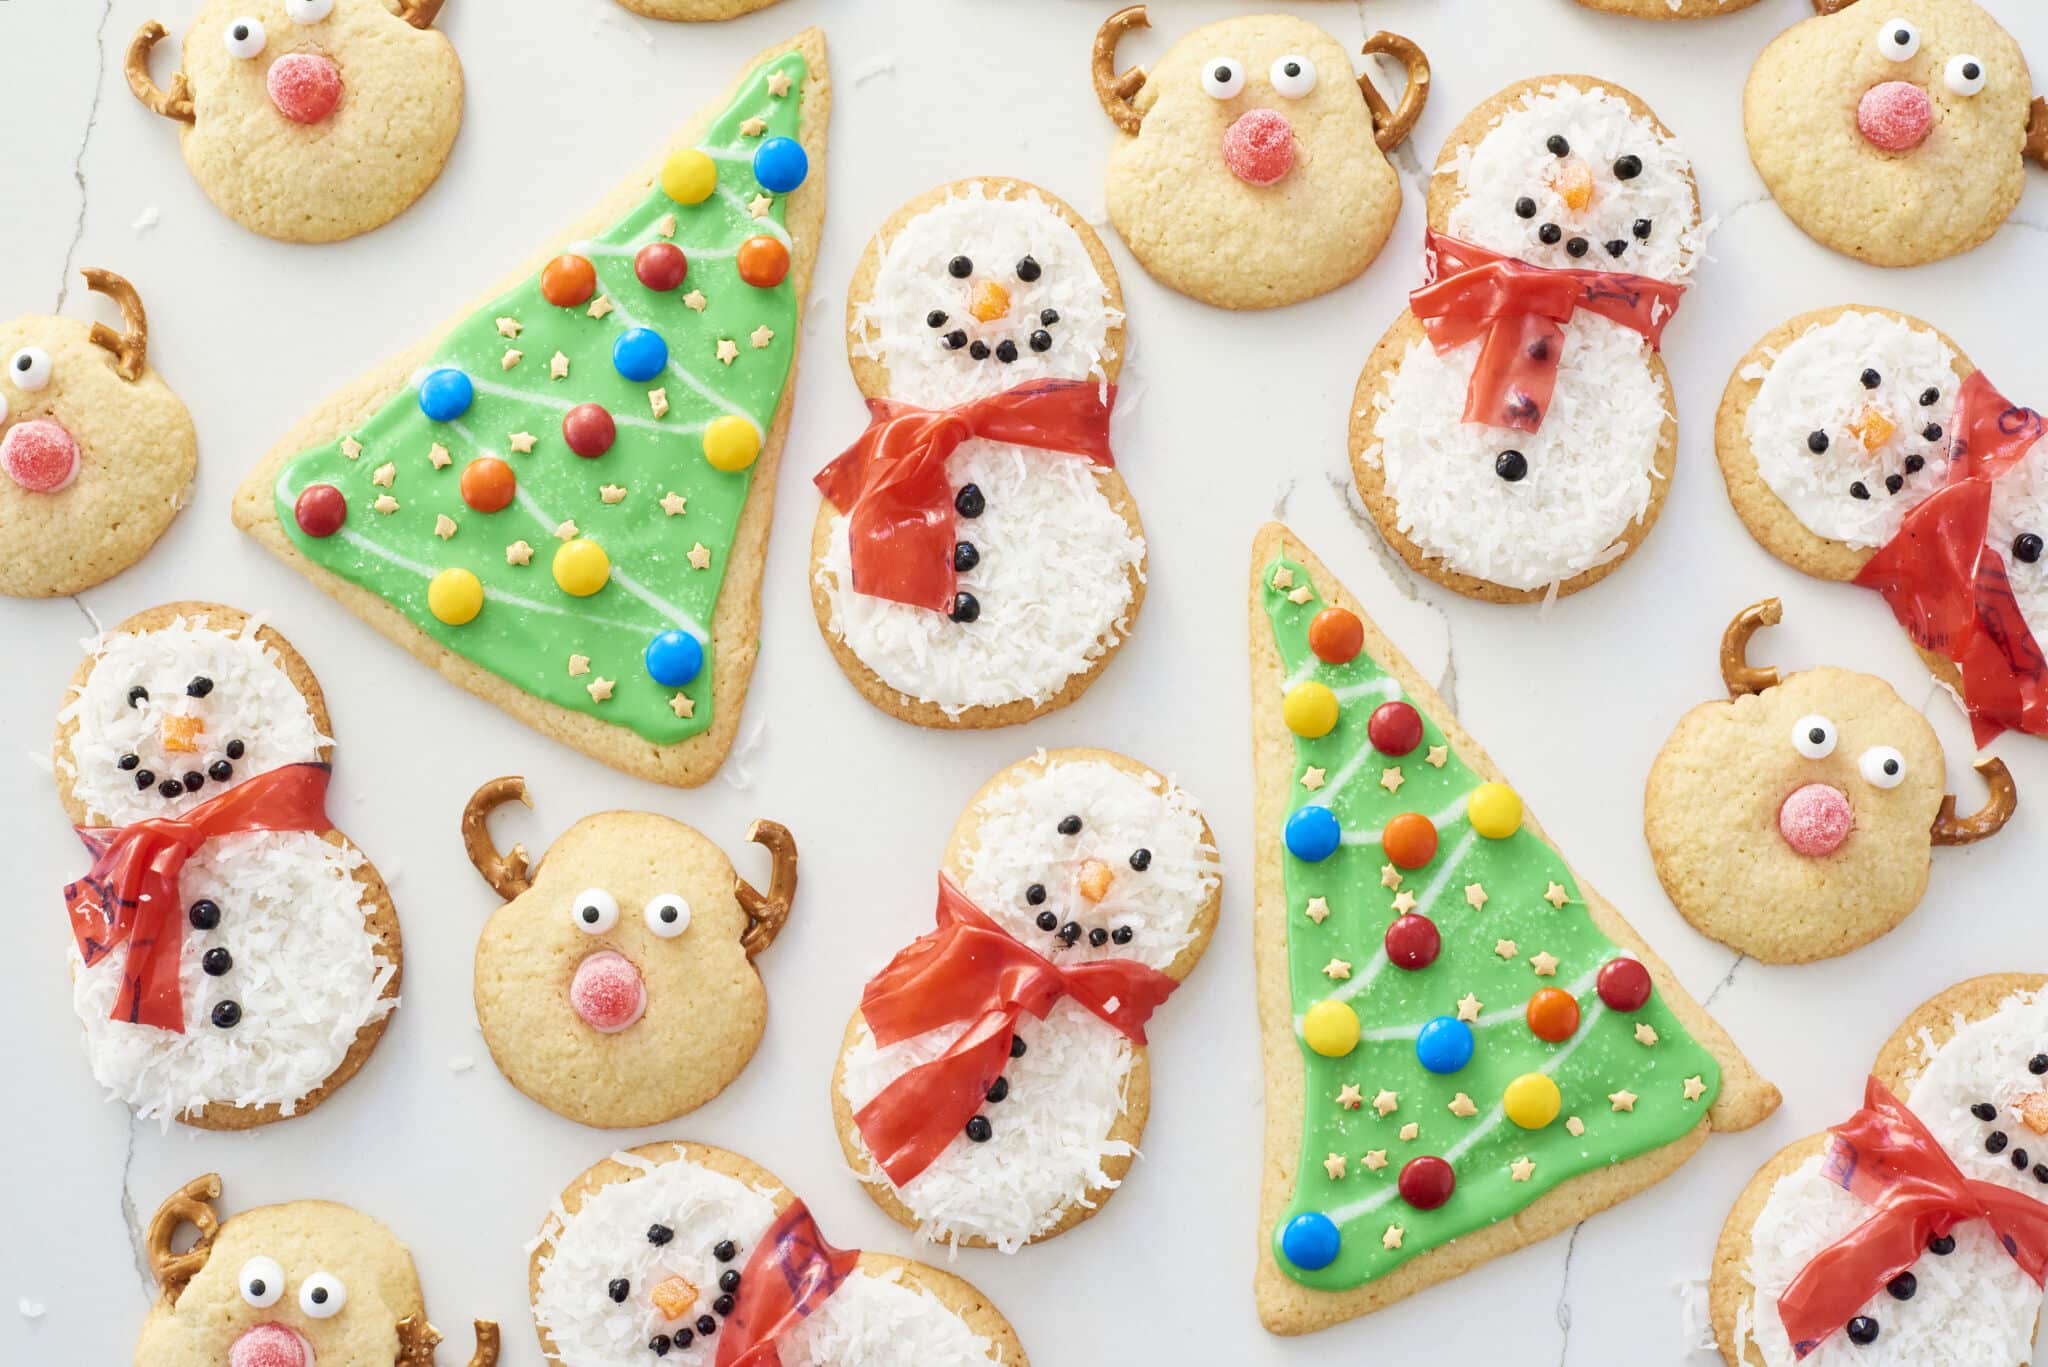 https://www.biggerbolderbaking.com/wp-content/uploads/2022/11/Kids-Christmas-Cookies-Thumnbail-scaled.jpg